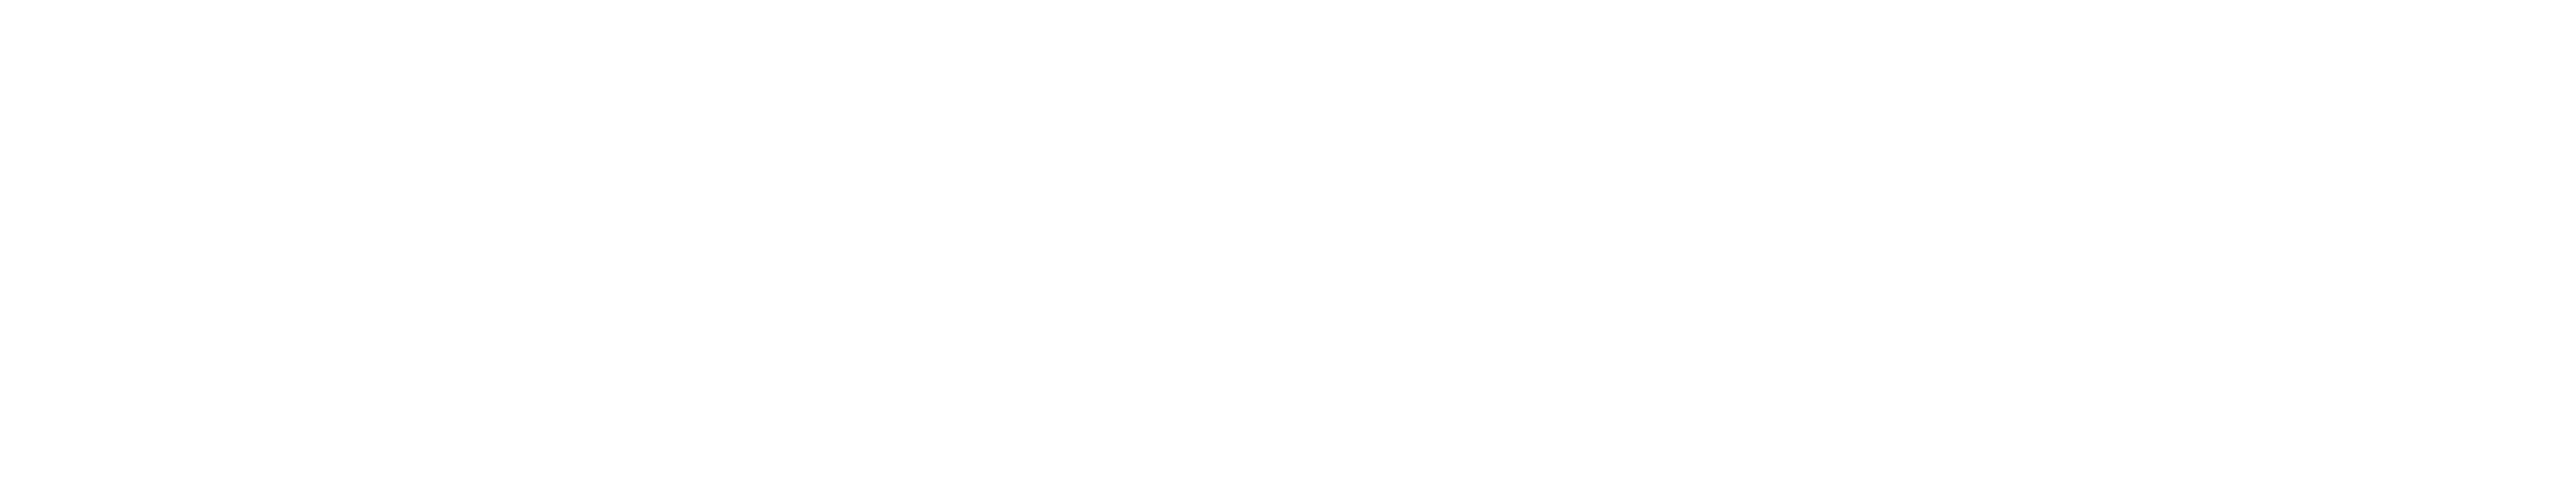 PLAN5D.COM